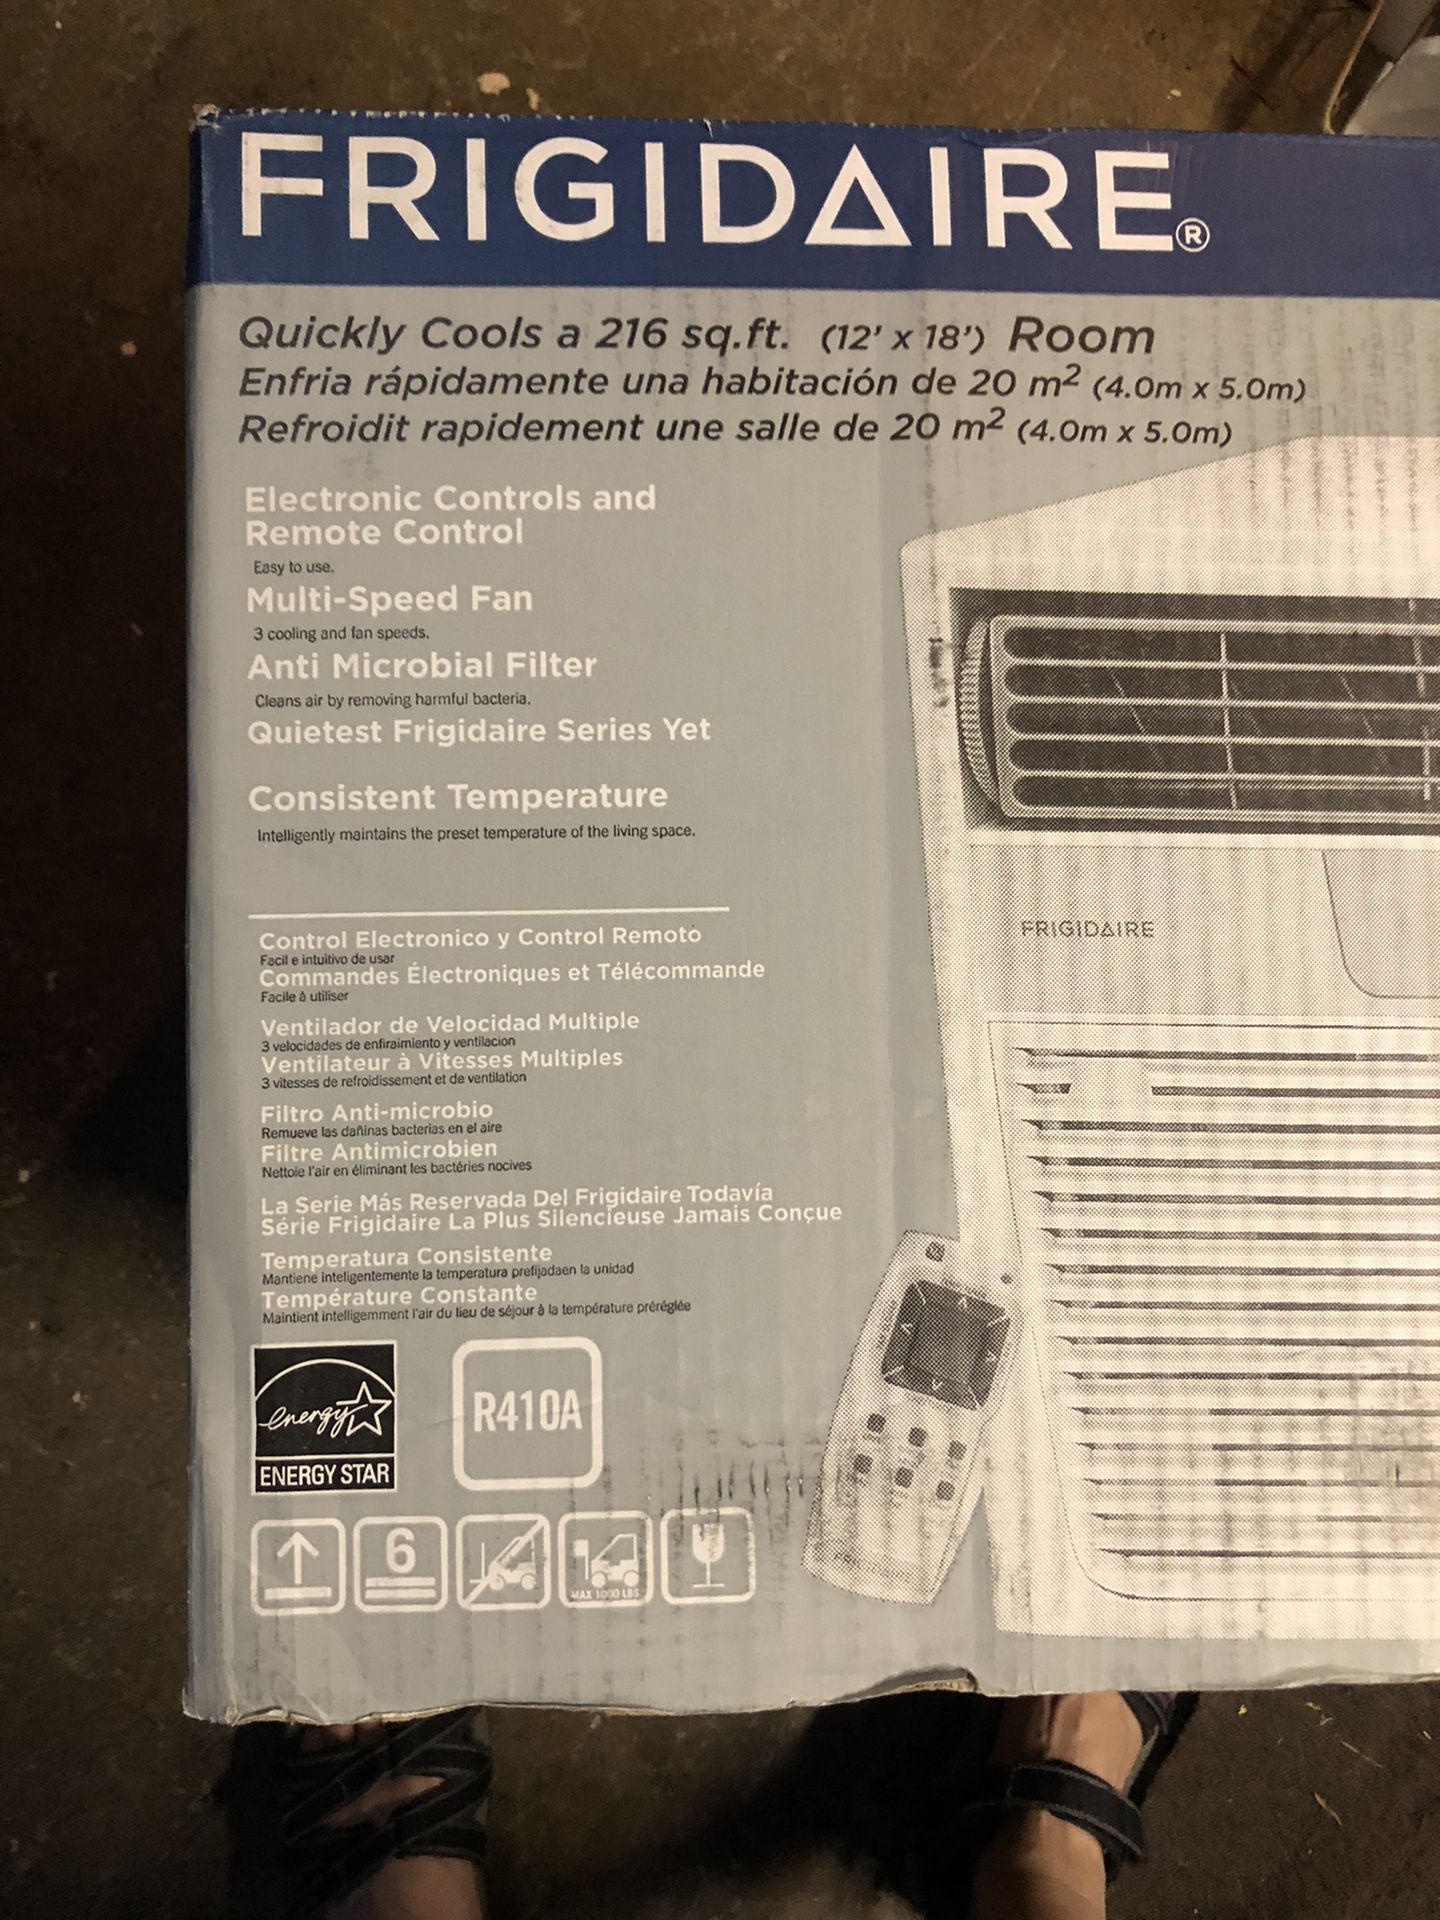 Frigidaire window air conditioner 6000btu’s